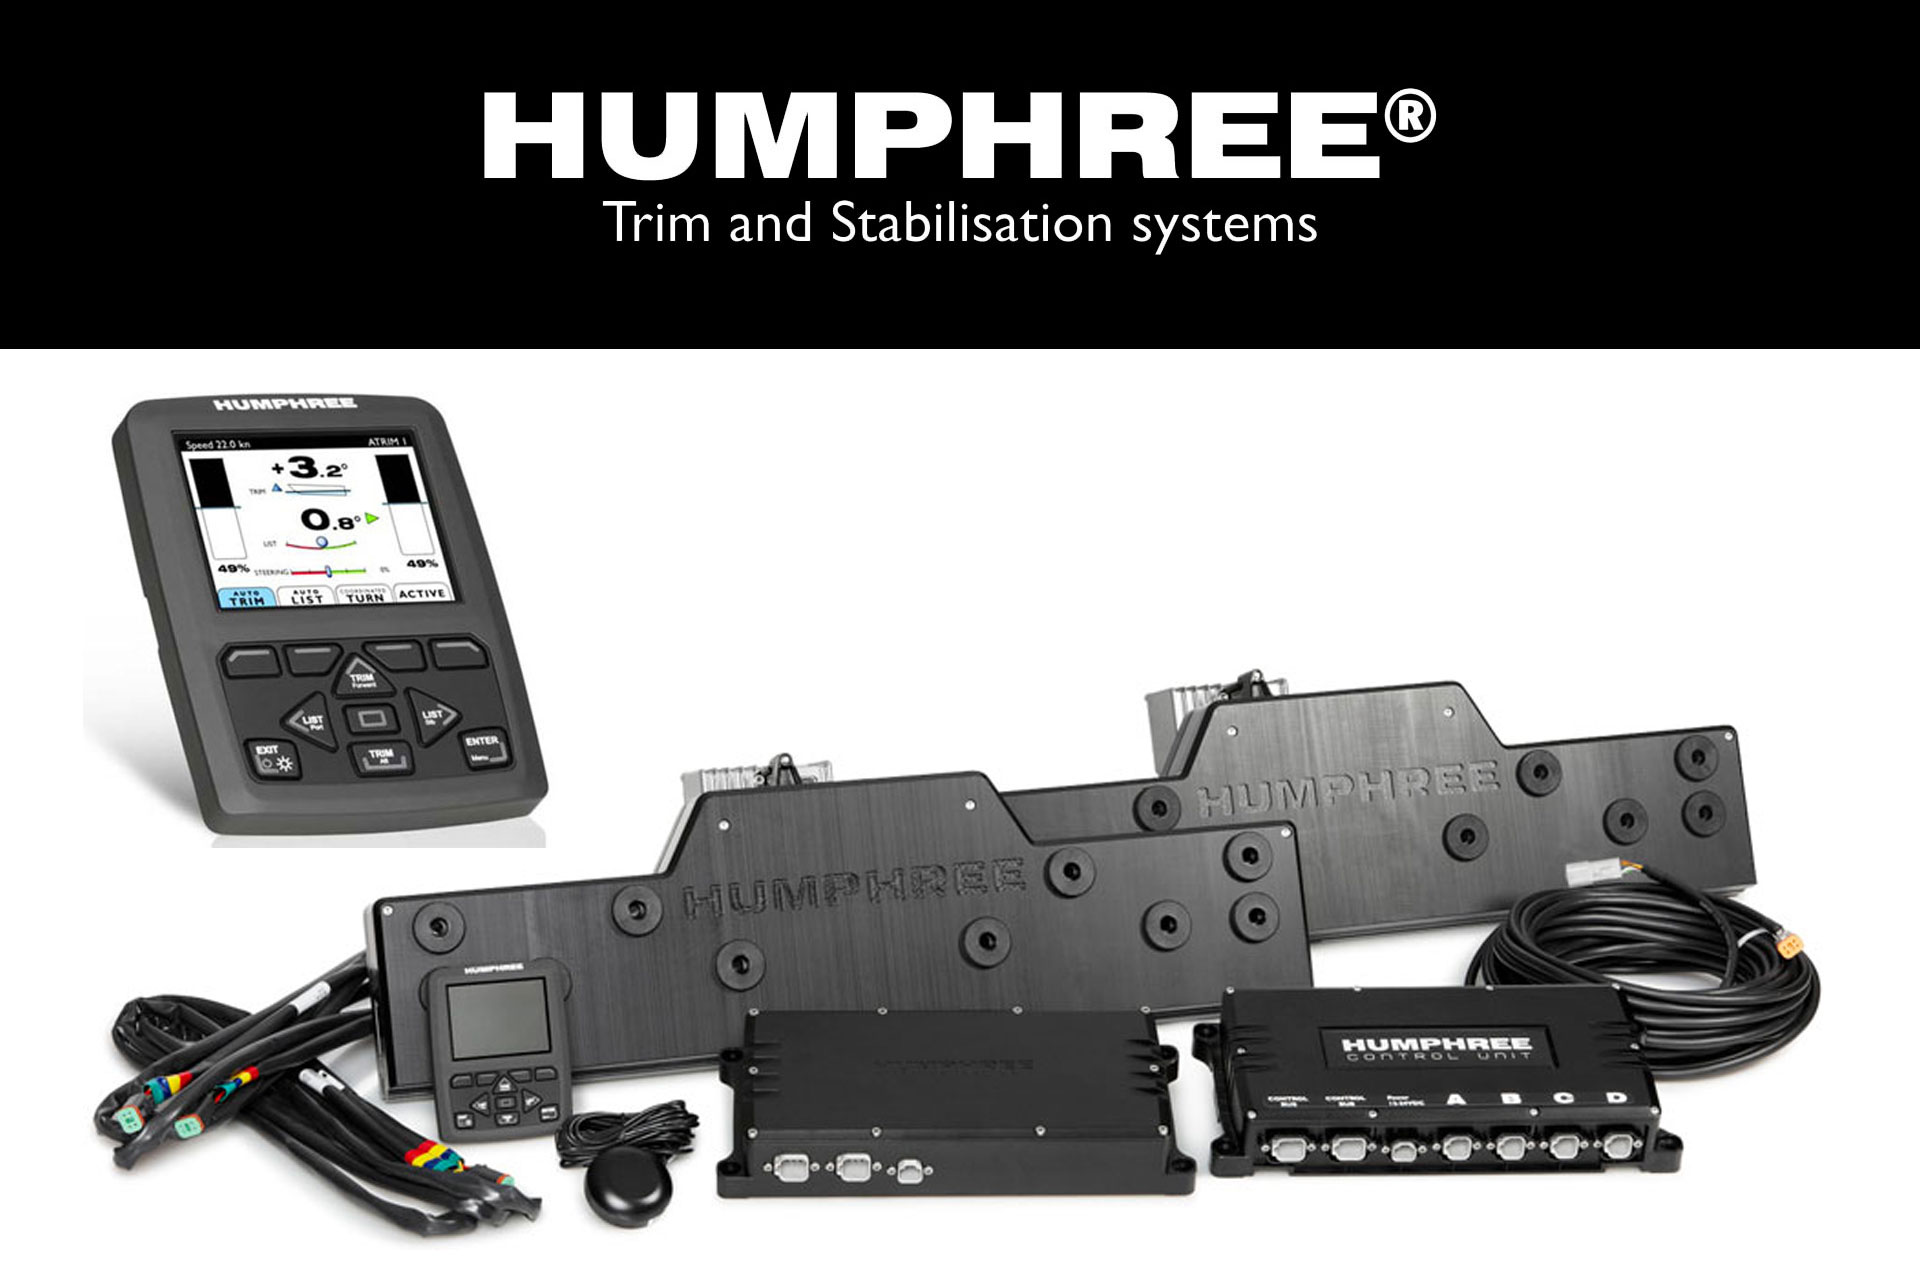 Humphree trim and stabilisation system